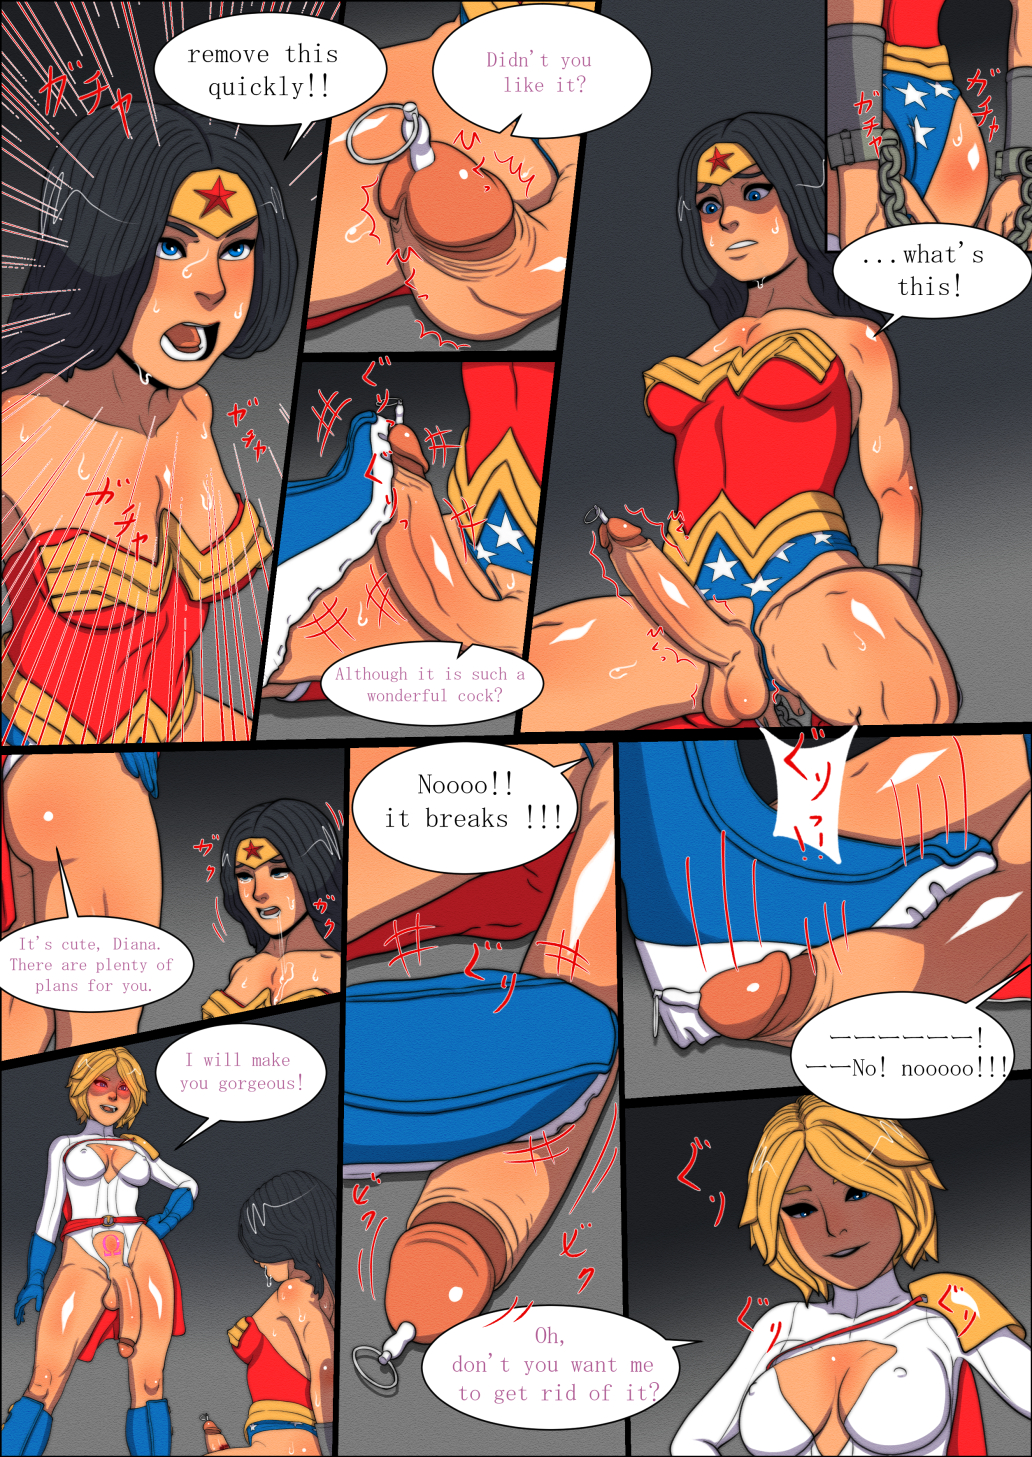 best of Woman power wonder girl comics